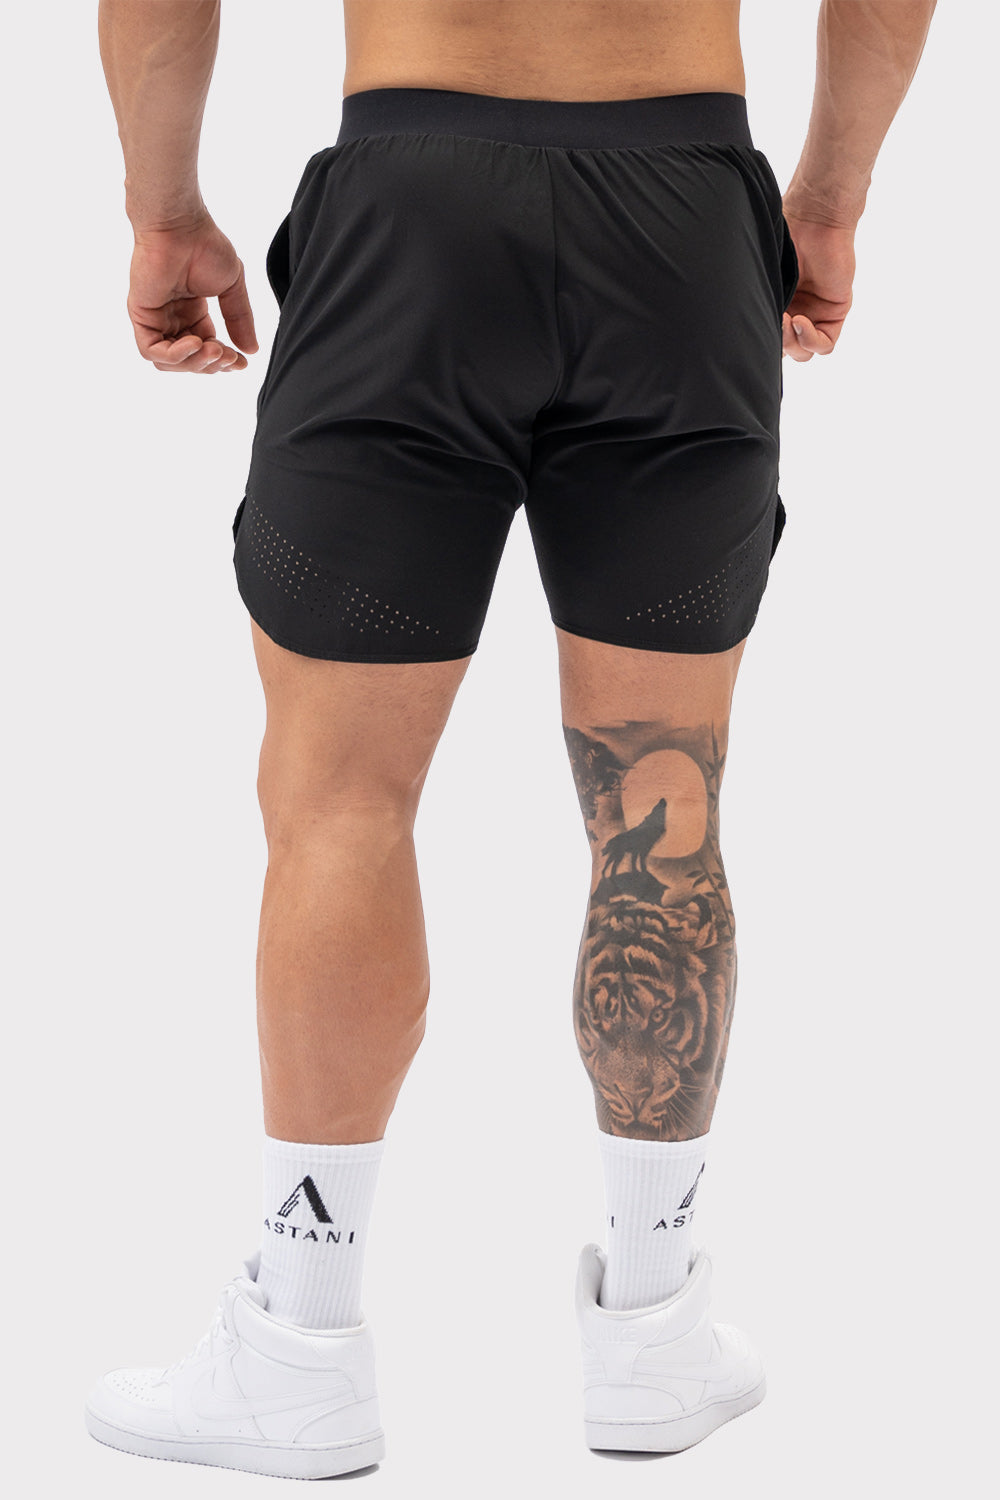 A VELOCE Shorts - Negro     